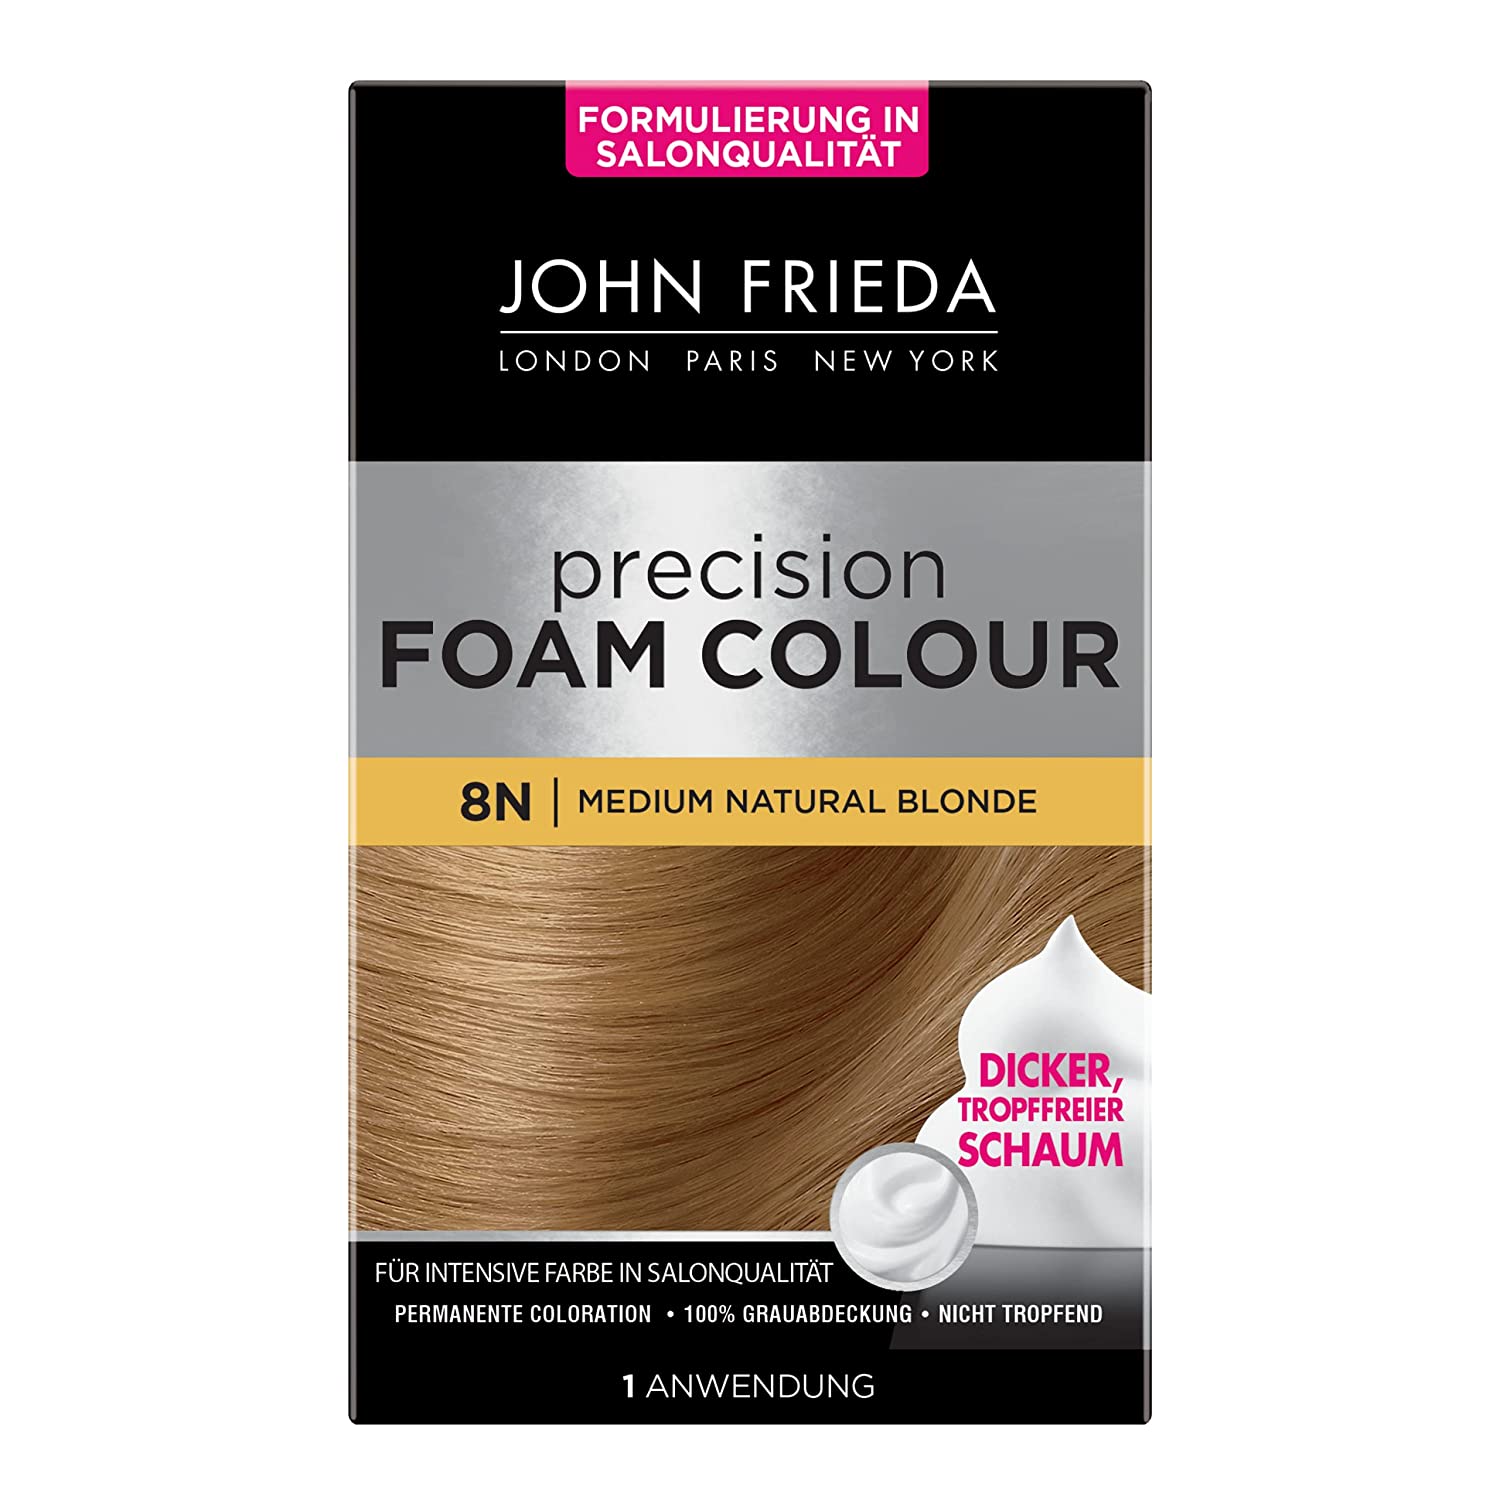 John Frieda Precision Foam Colour - Colour: 8N Medium Natural Blonde - Medium Blonde - Permanent Foam Colouration - Perfect, Even Coverage - For 1 Application, ‎yellow